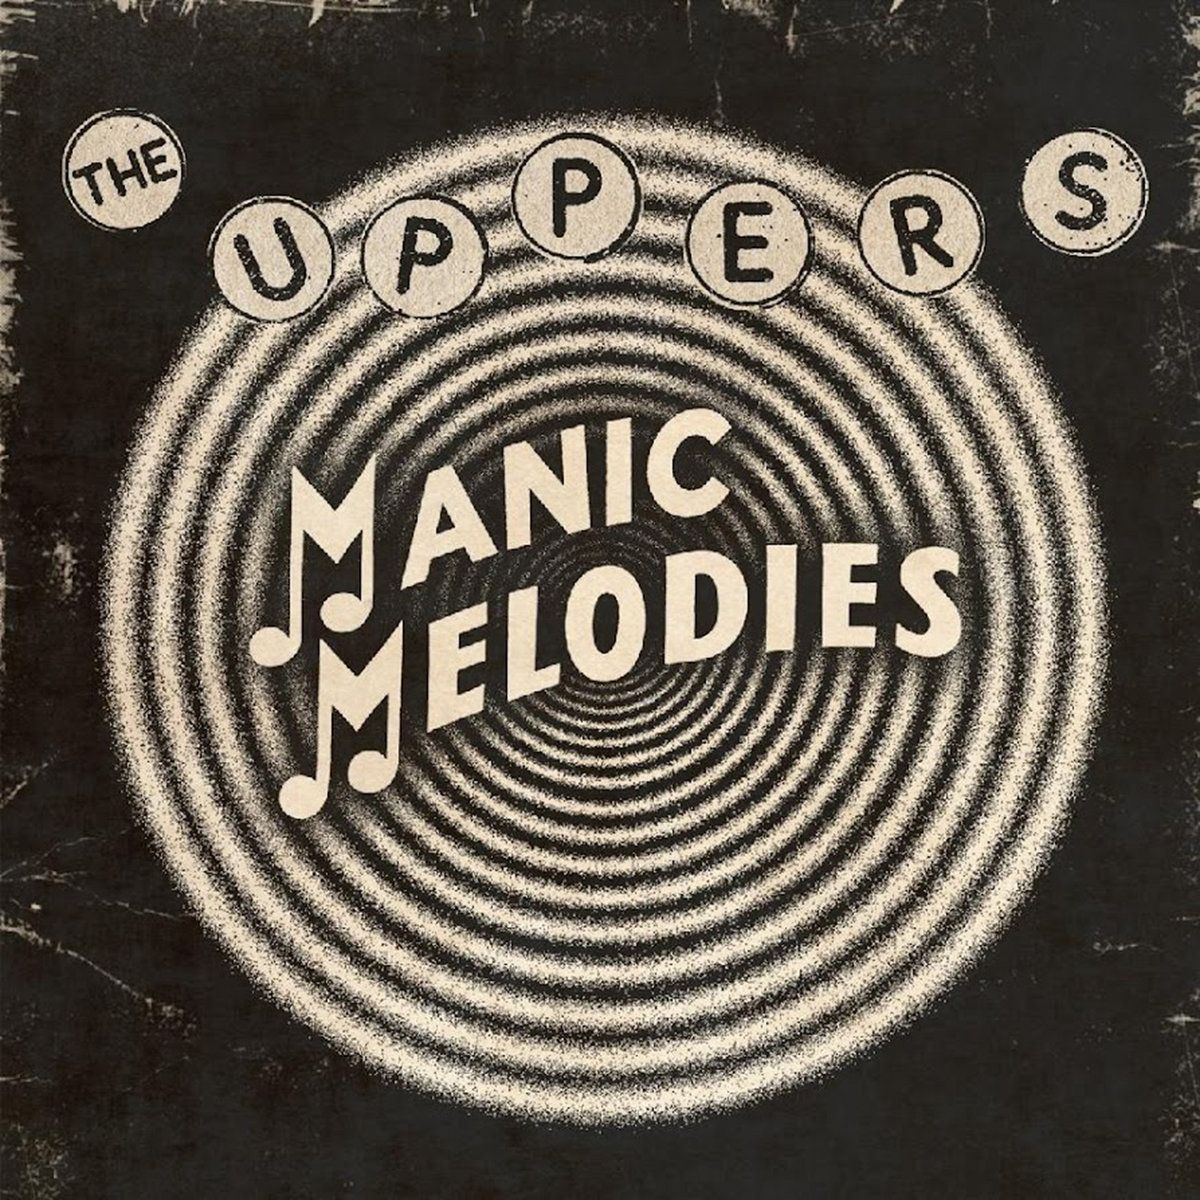 The Uppers ‘Manic Melodies’ album artwork